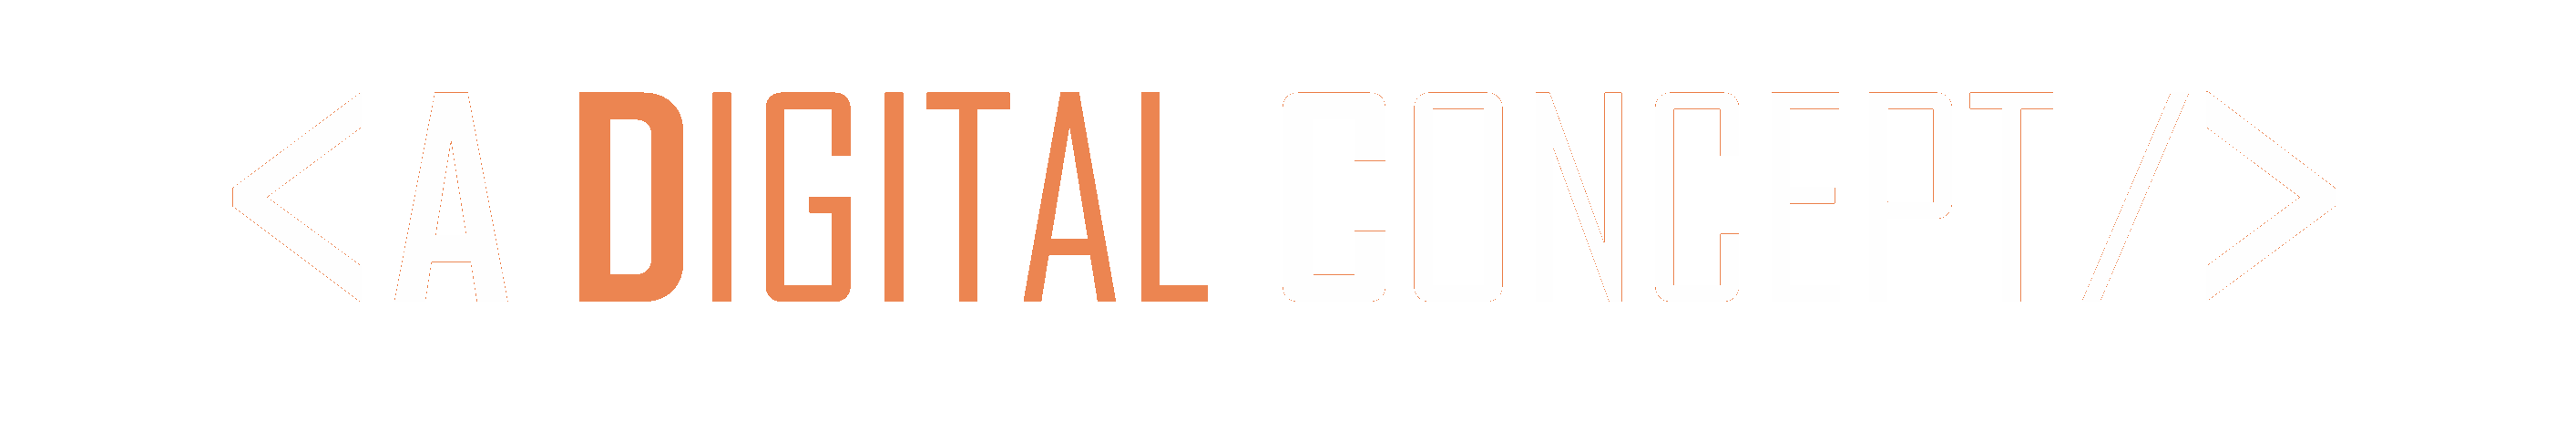 A Digital Concept logo